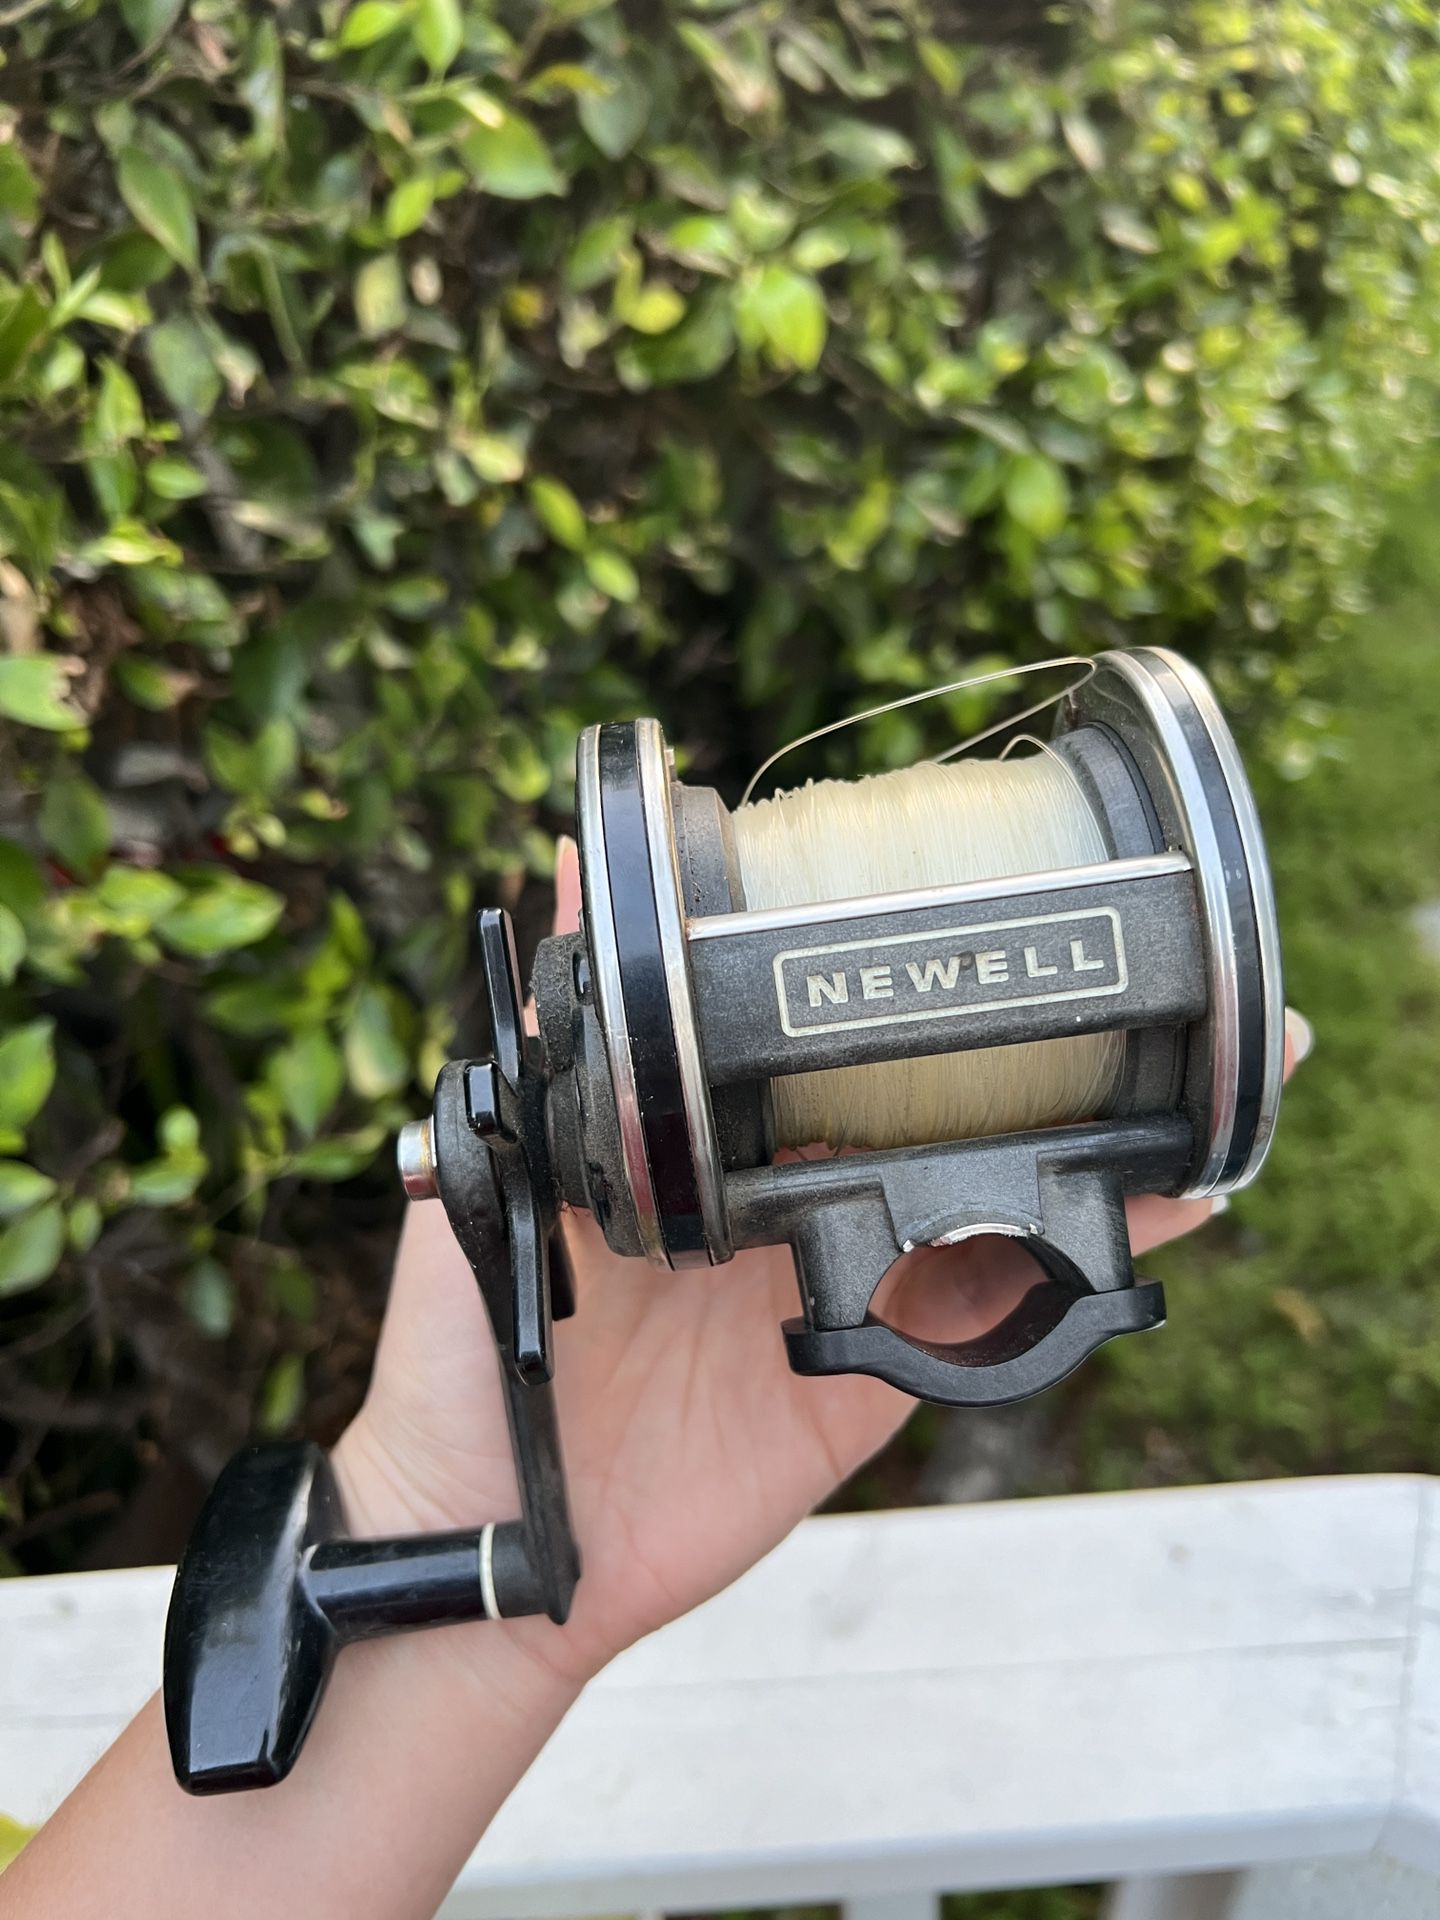 Newell fishing reel 